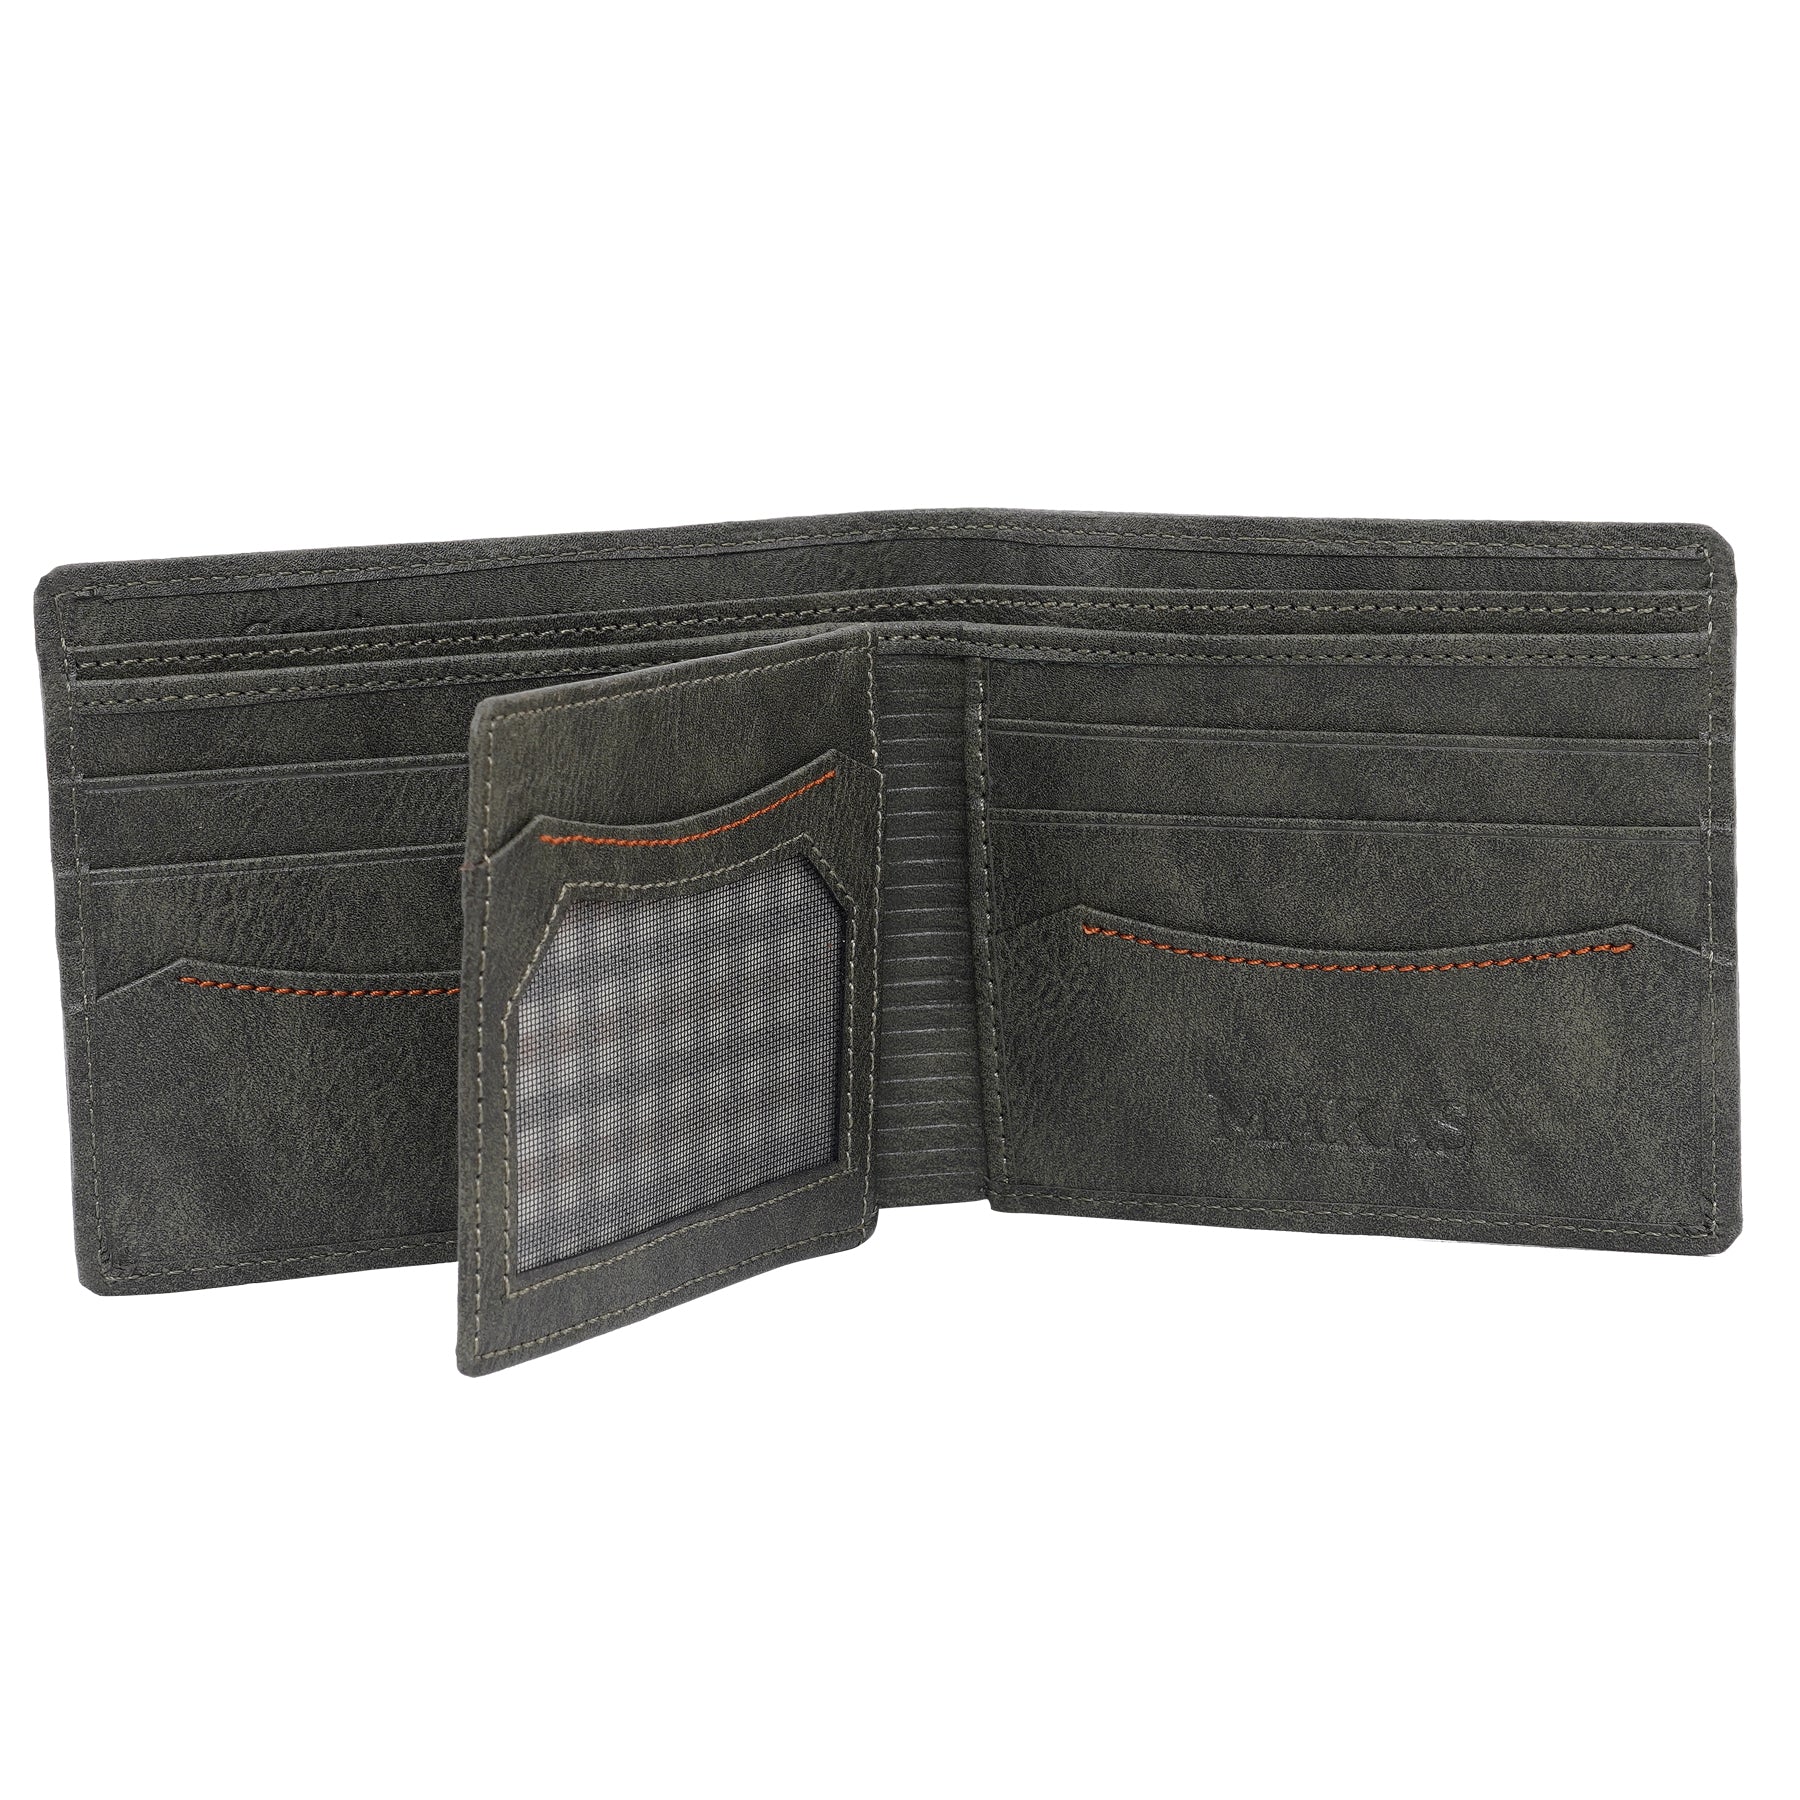 Makas men's wallet , internal look 3,color - Green